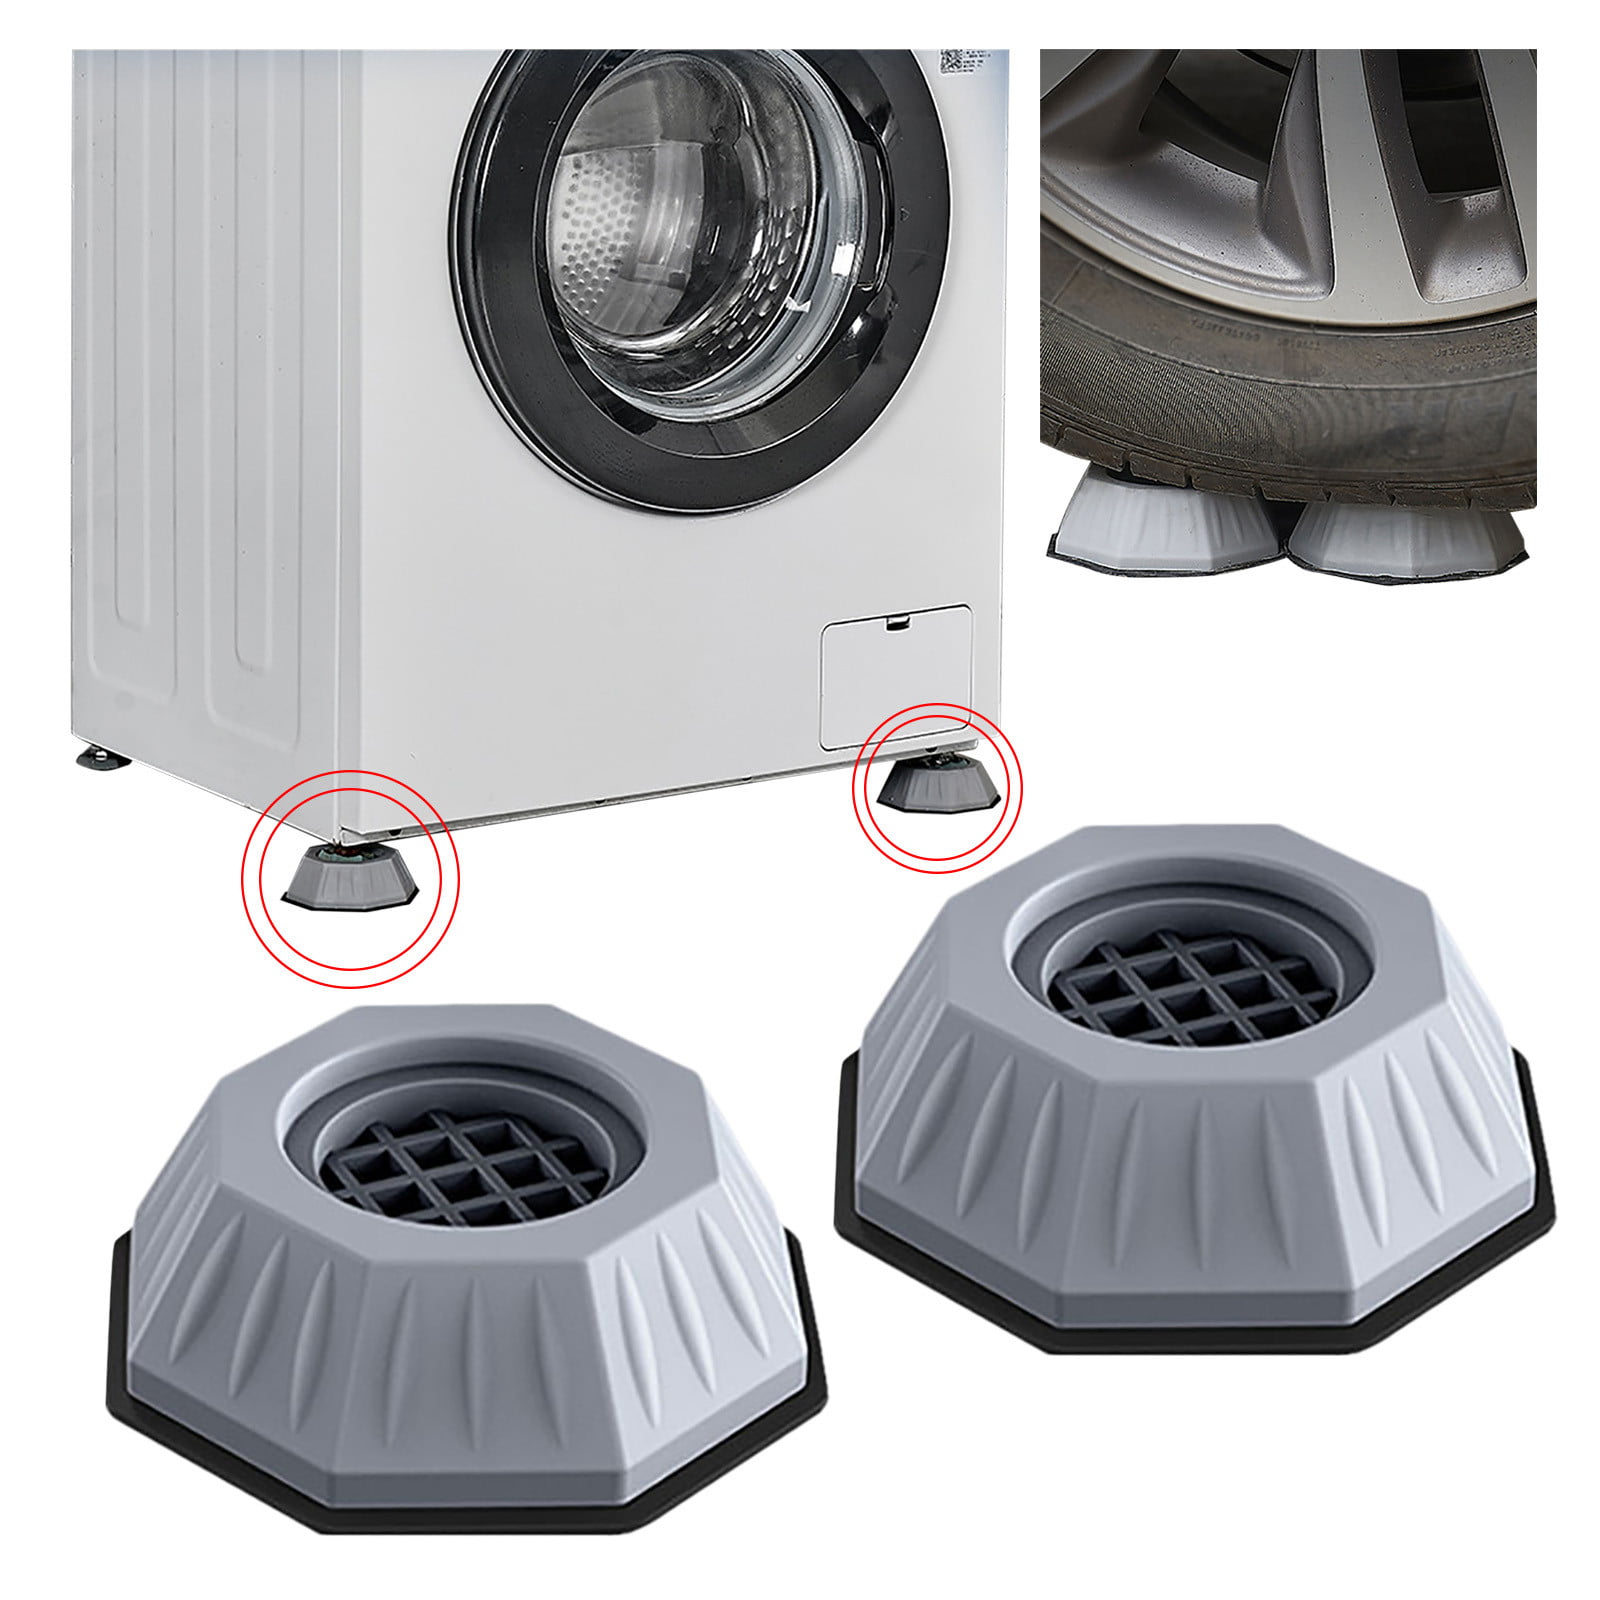 Washing Machine Support Mats Anti-Vibration Legs Stopper Foot Feet Pad Pads C5F8 